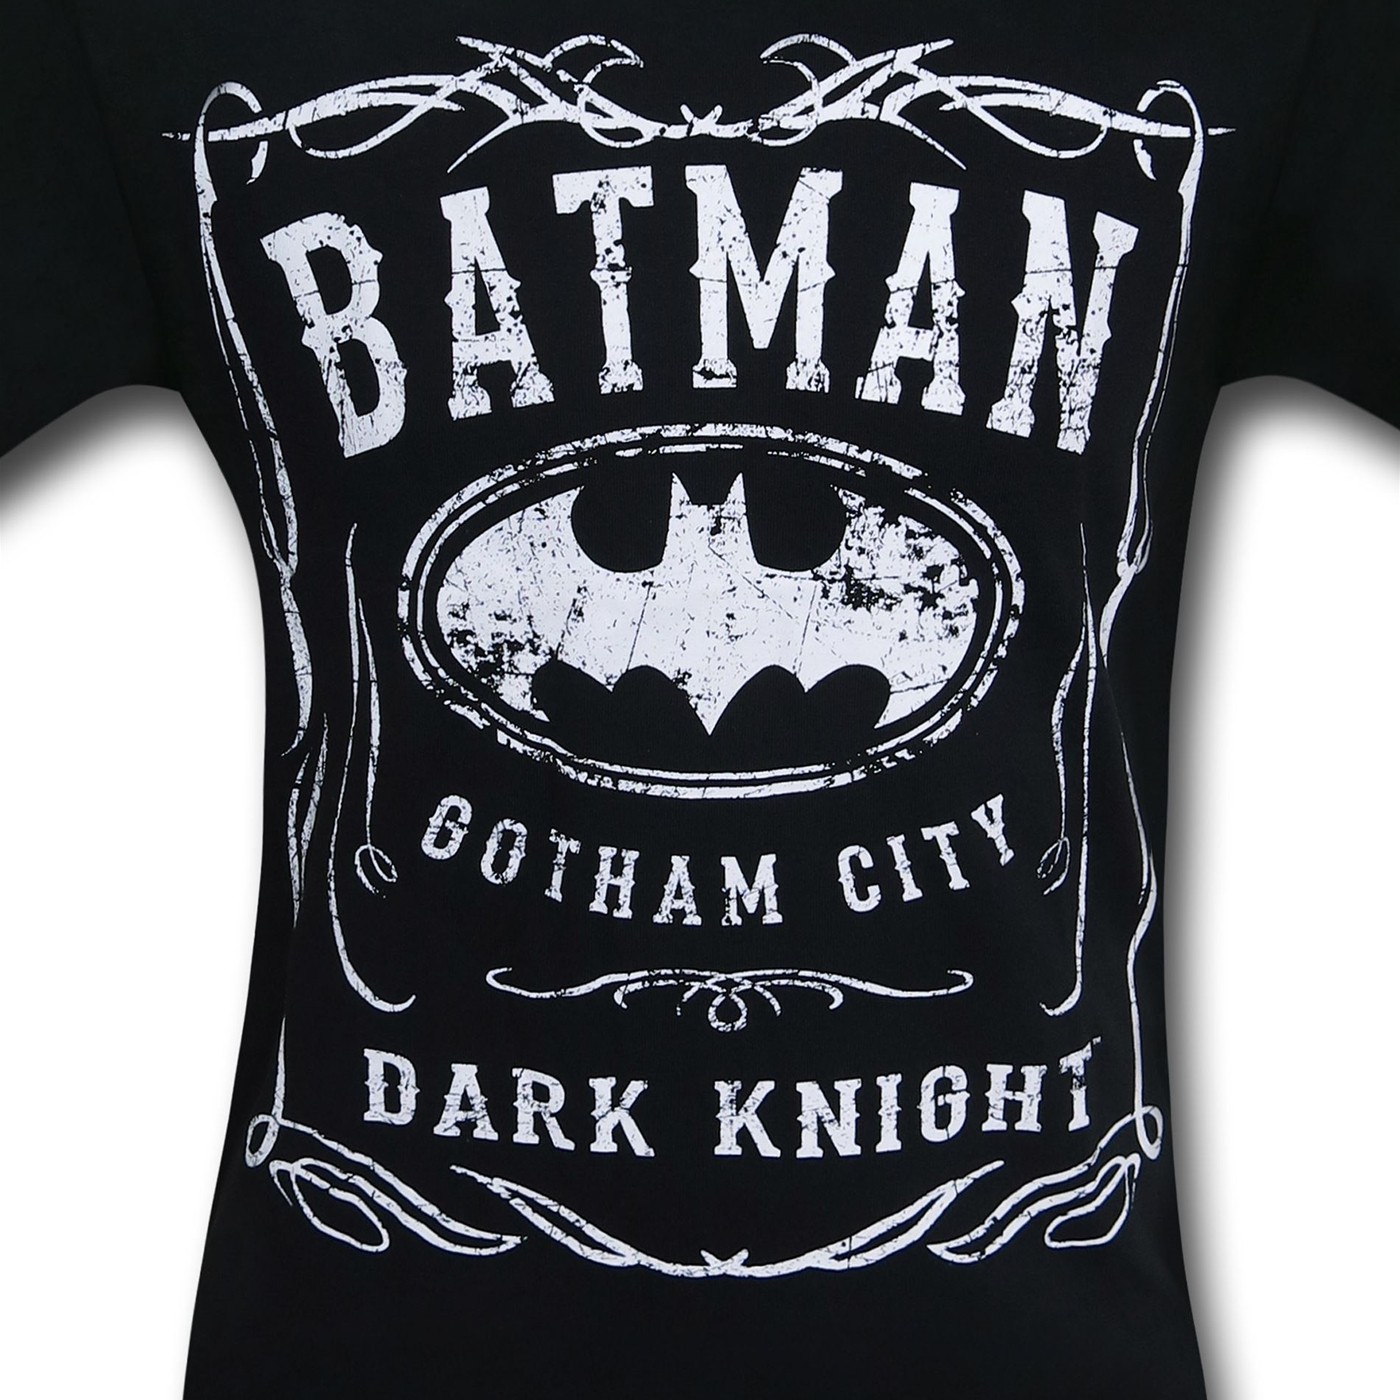 Batman Dark Knight Gotham Logo T-Shirt